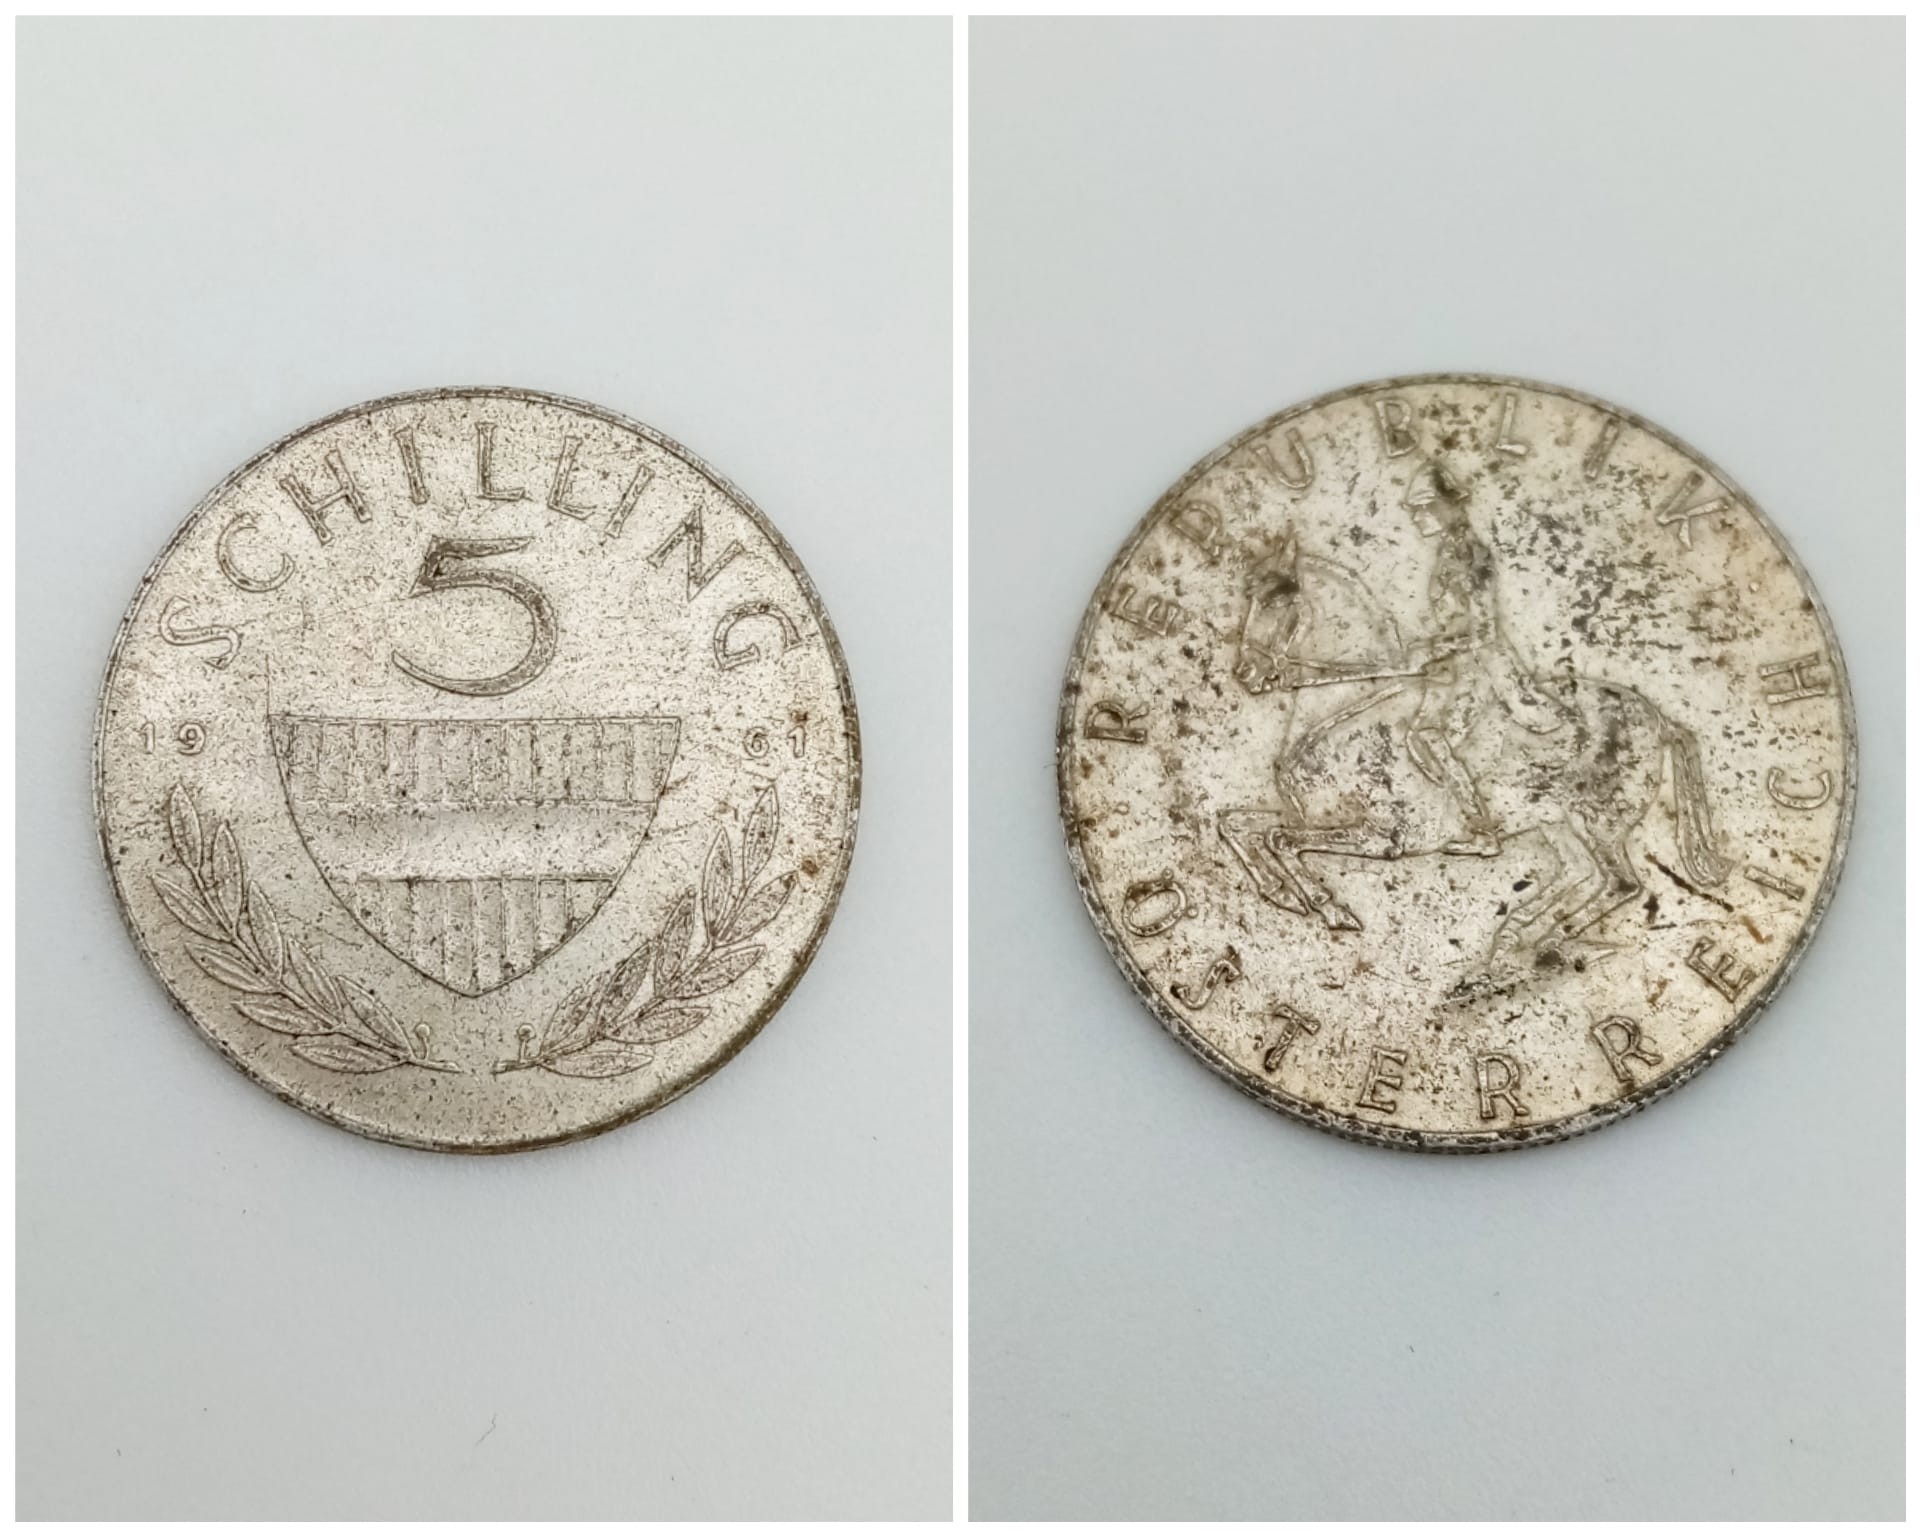 A 1961 5 SCHILLING COIN